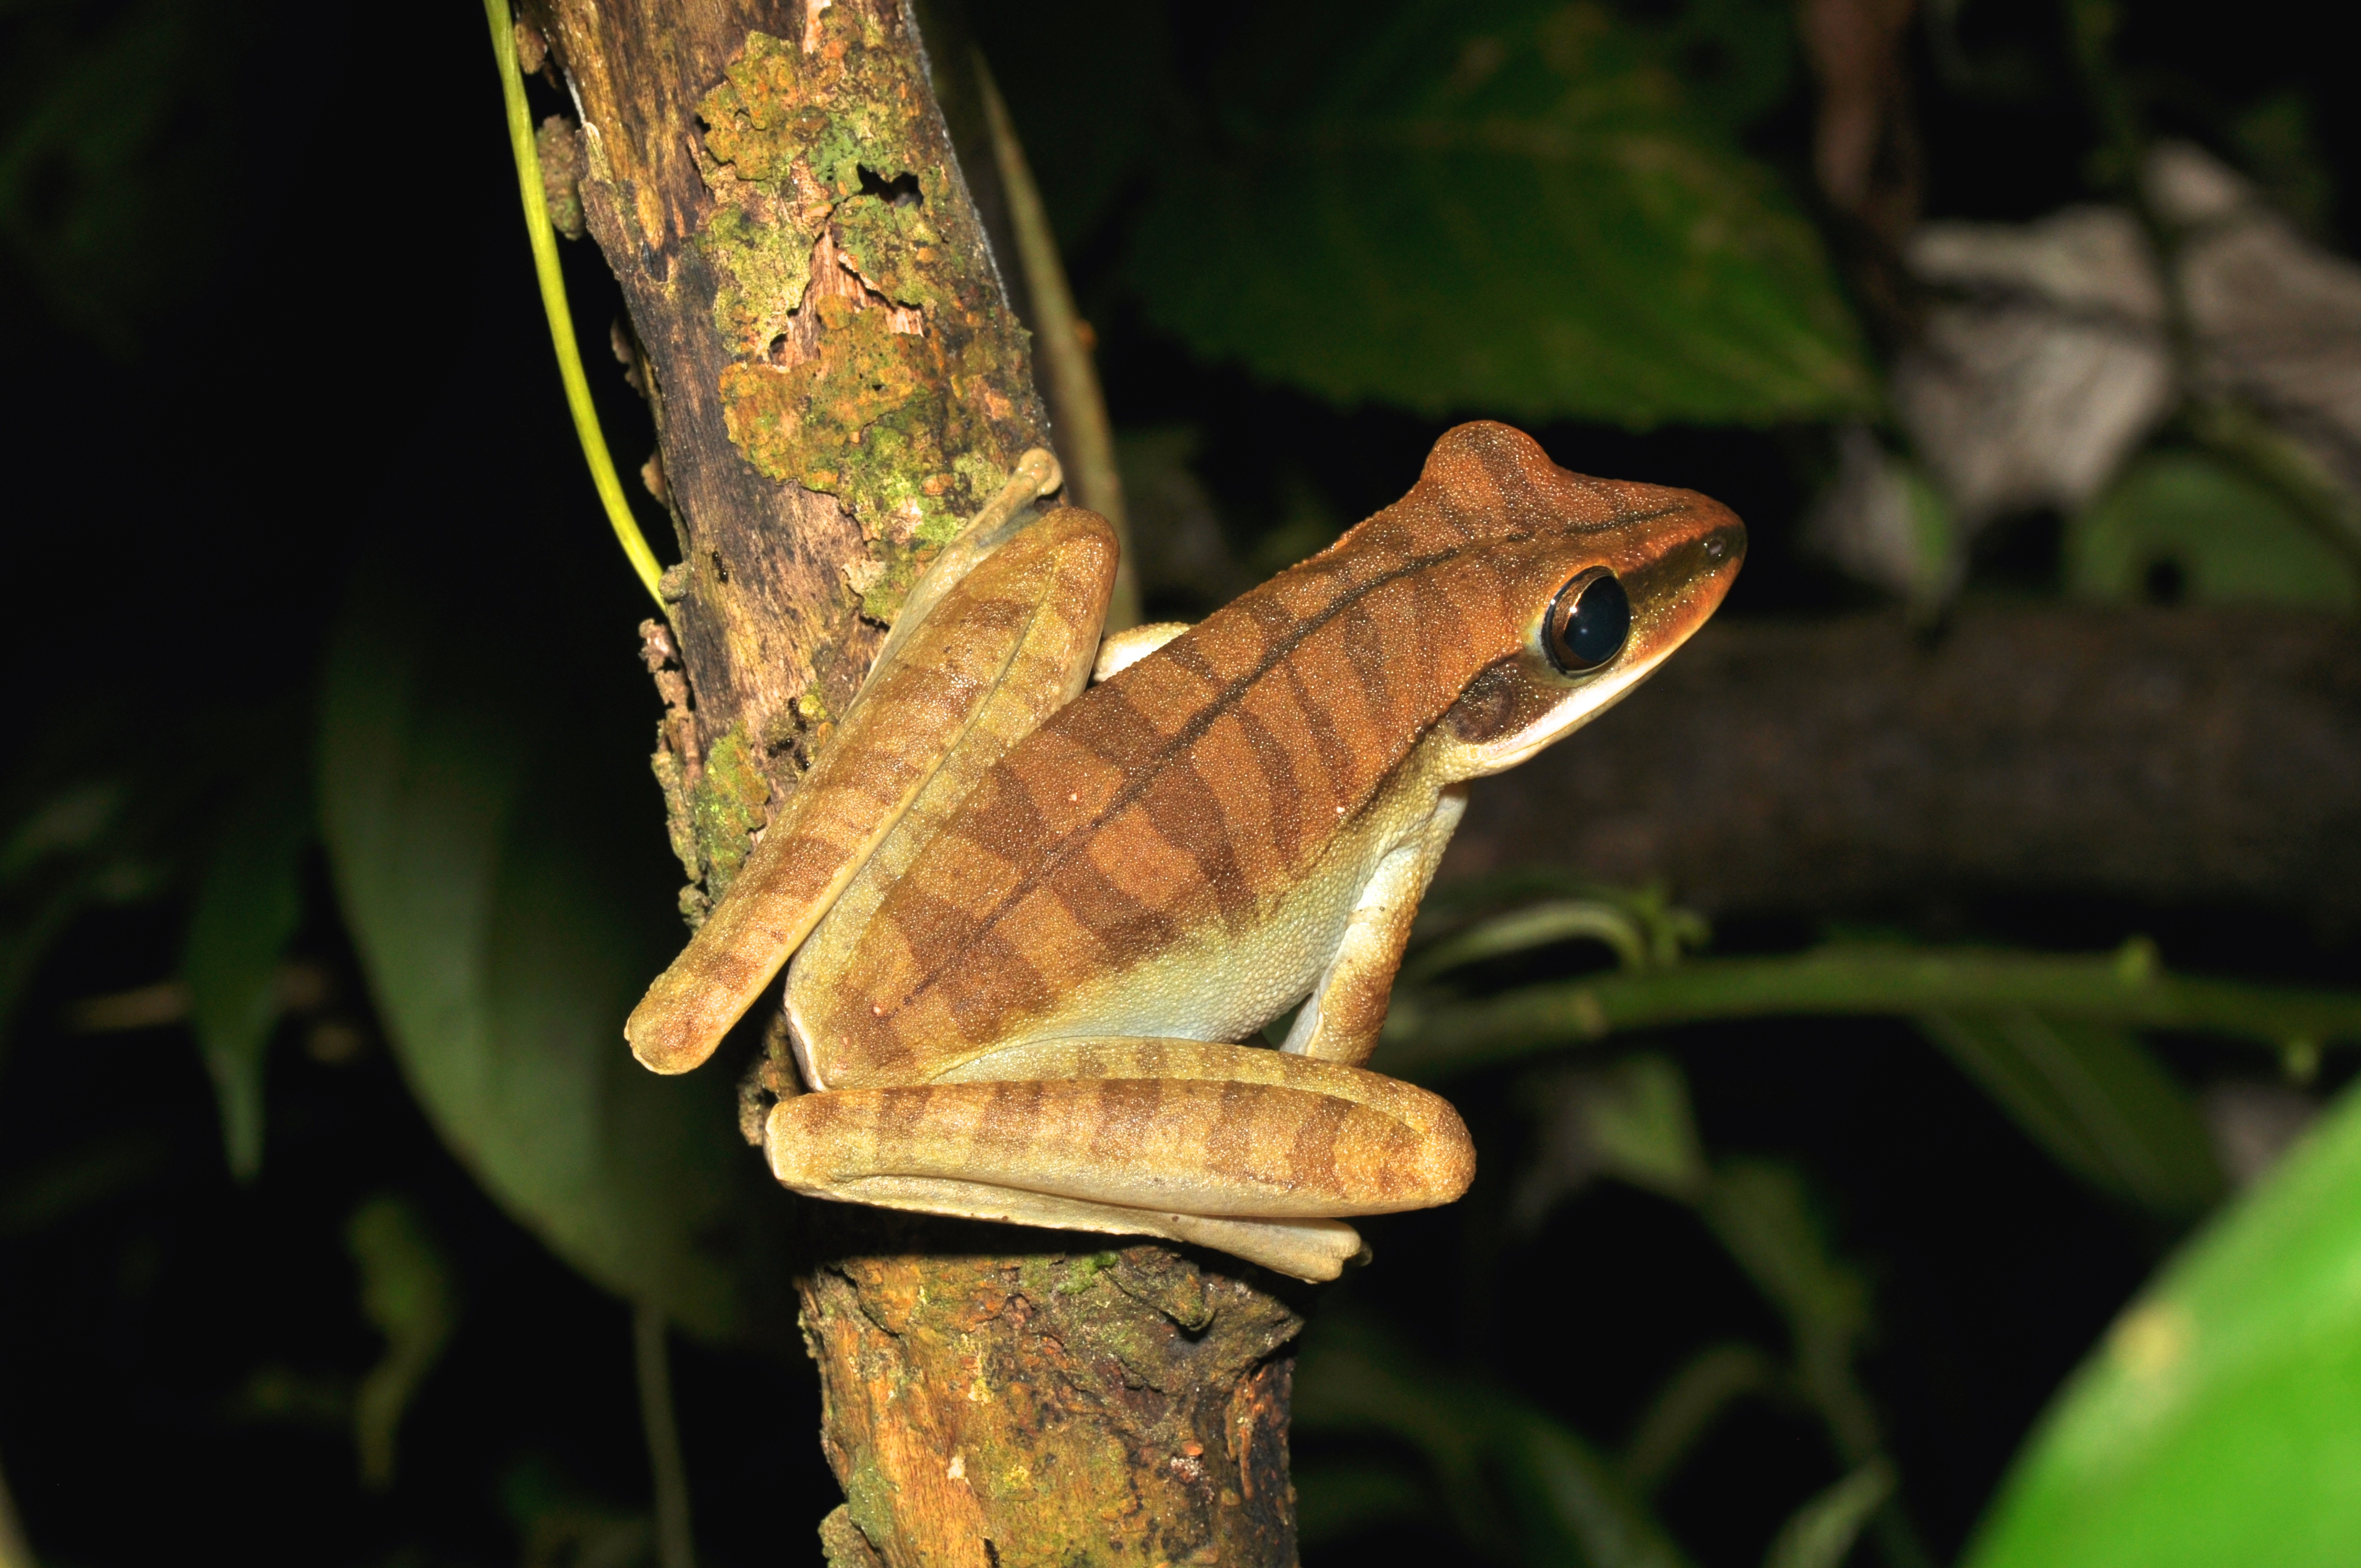 Basin tree frog, Hypsiboas lanciformis? (15543325255)